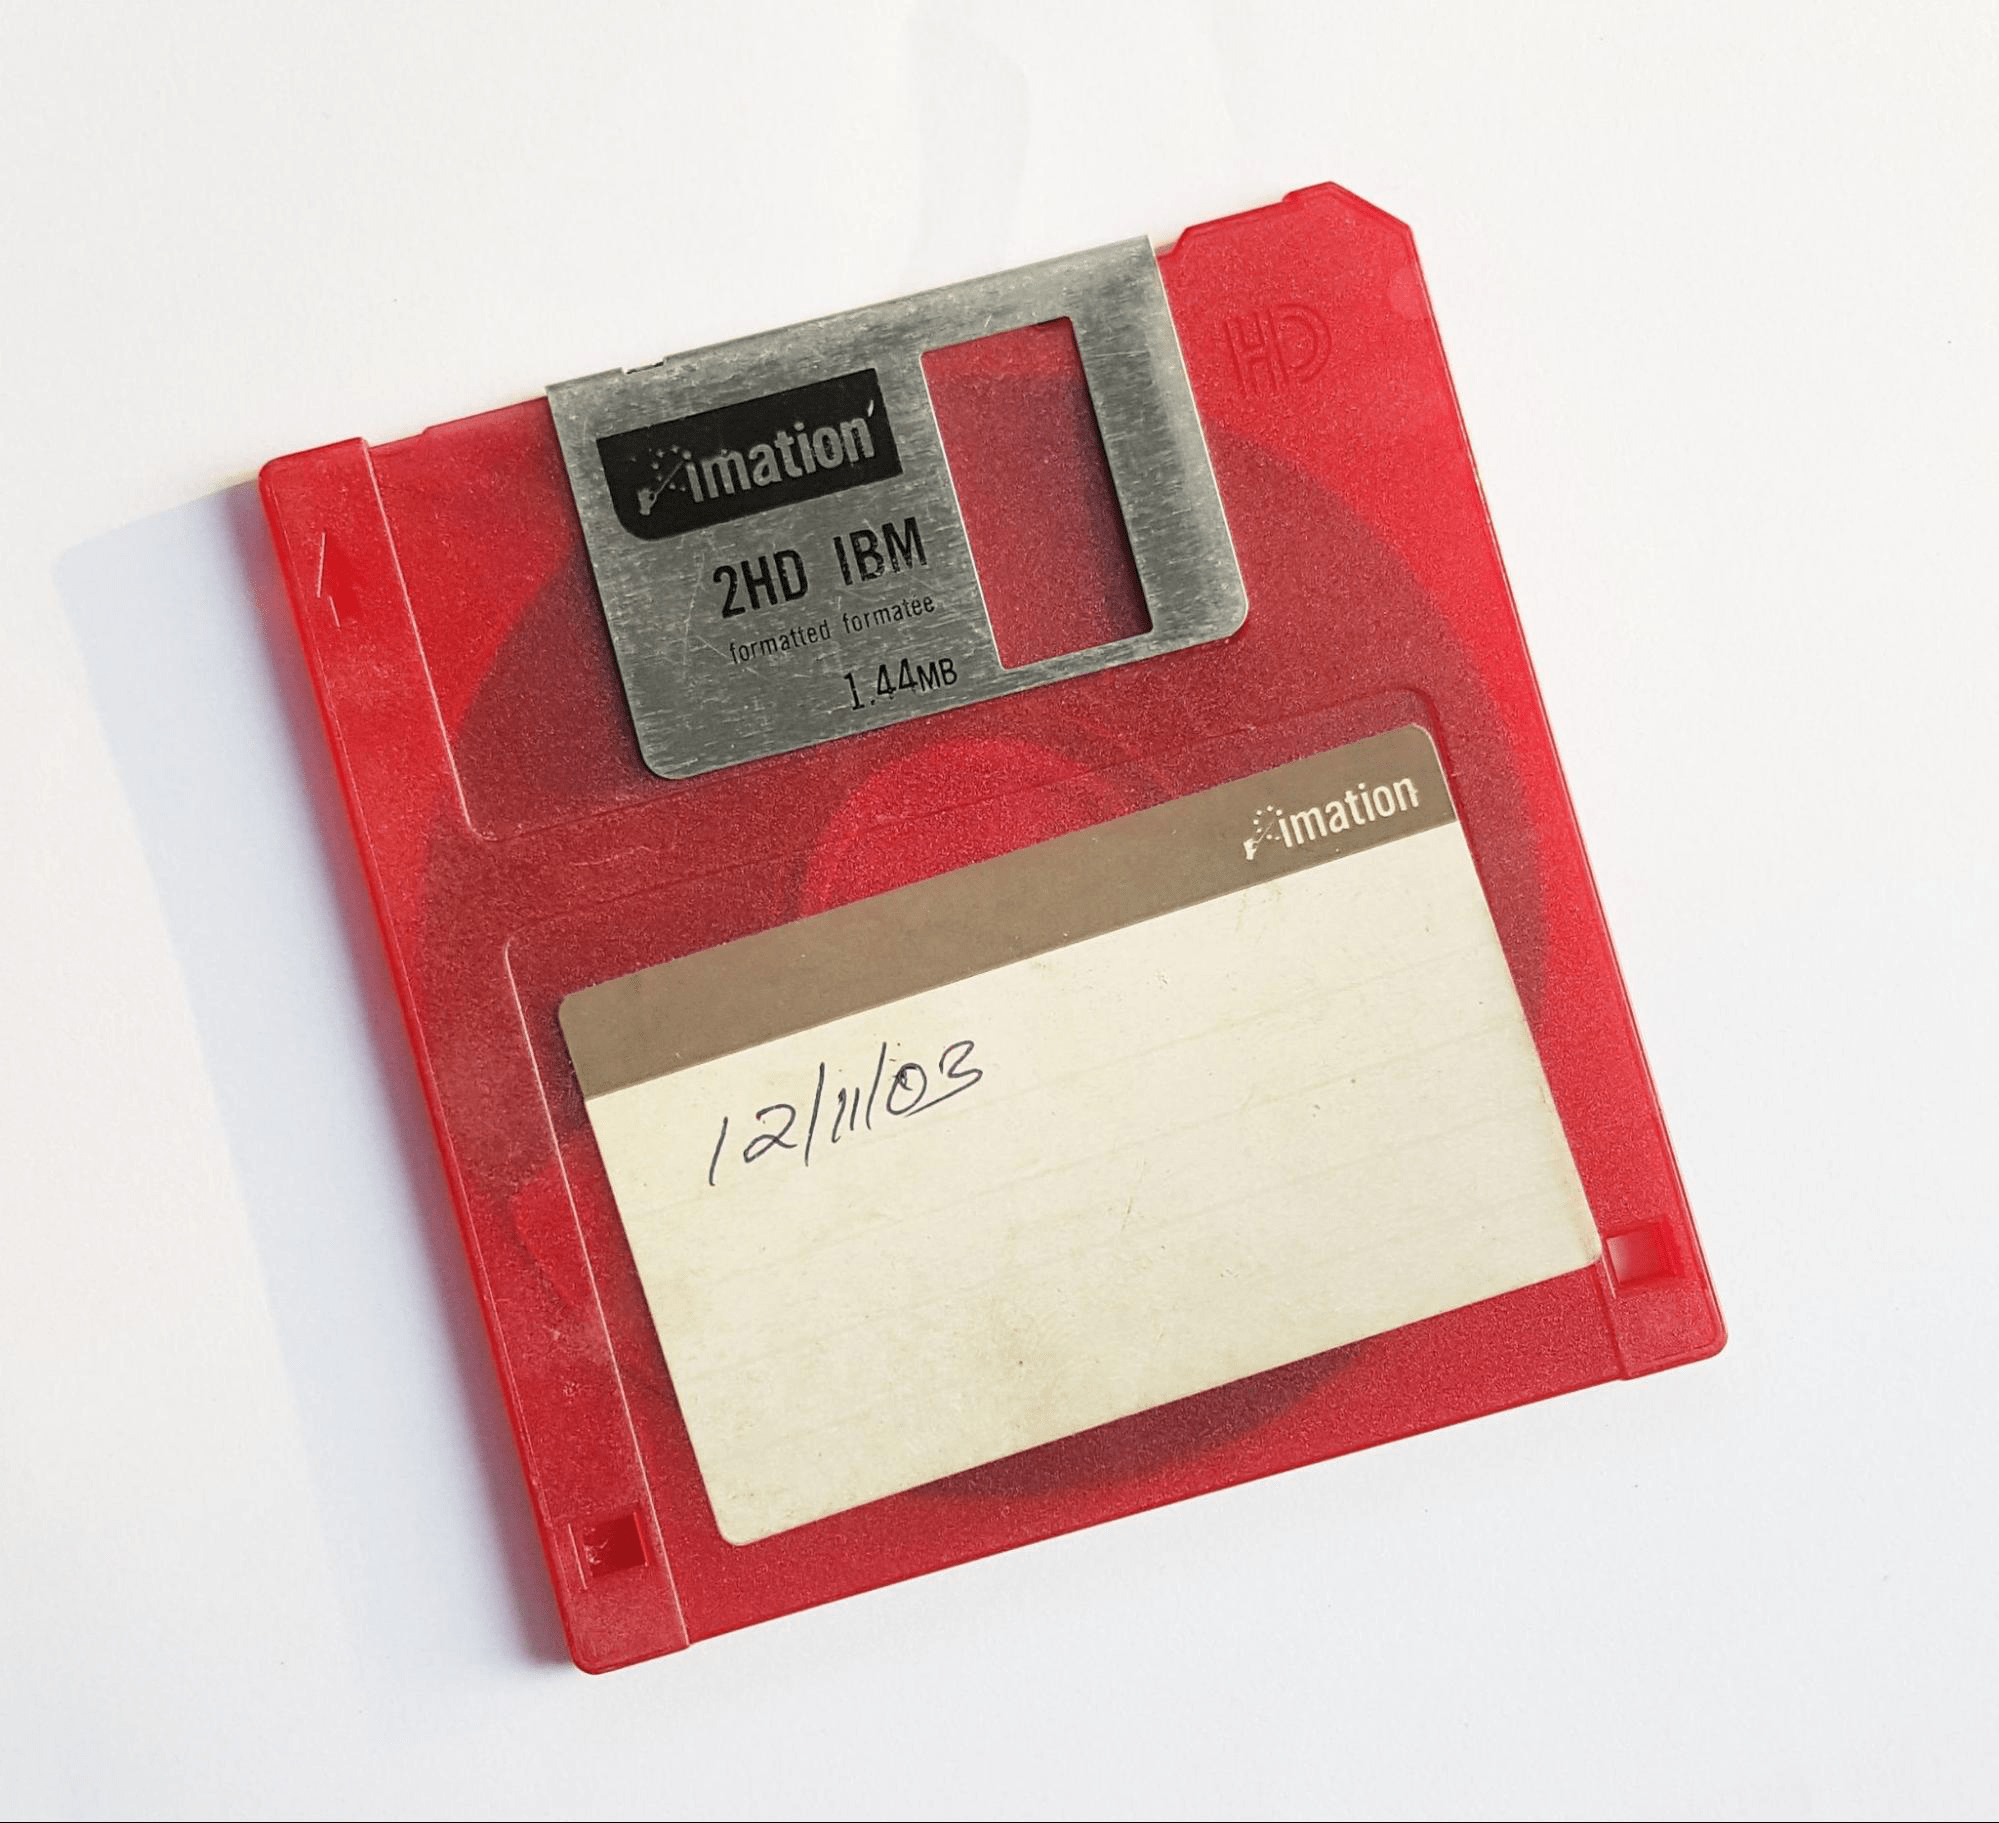 90s tech gadgets - floppy disk